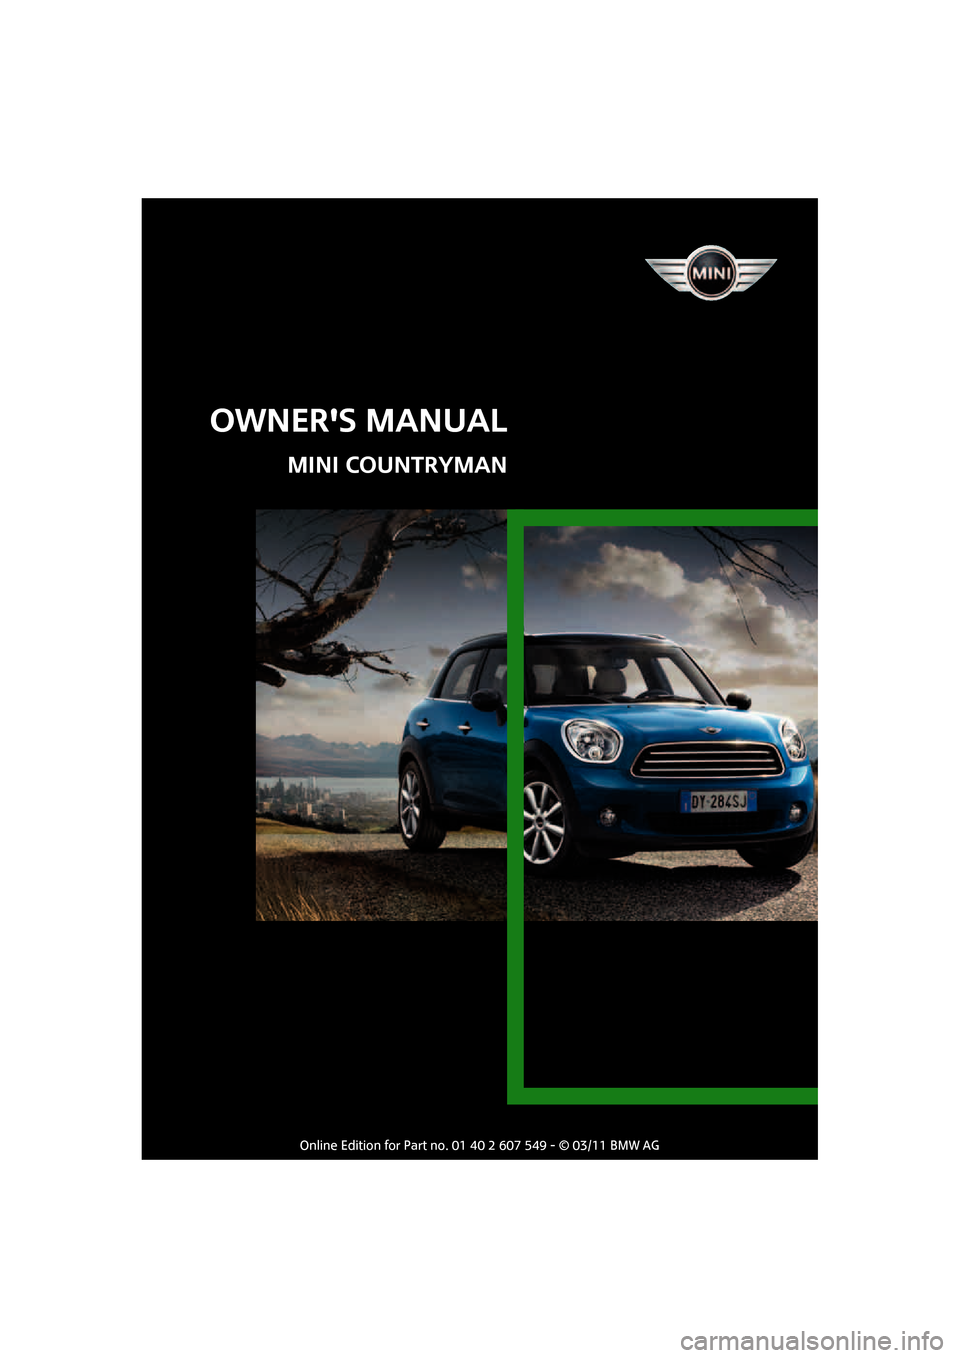 MINI Countryman 2011  Owners Manual (Mini Connected)   
OWNERS MANUAL
MINI COUNTRYMAN 